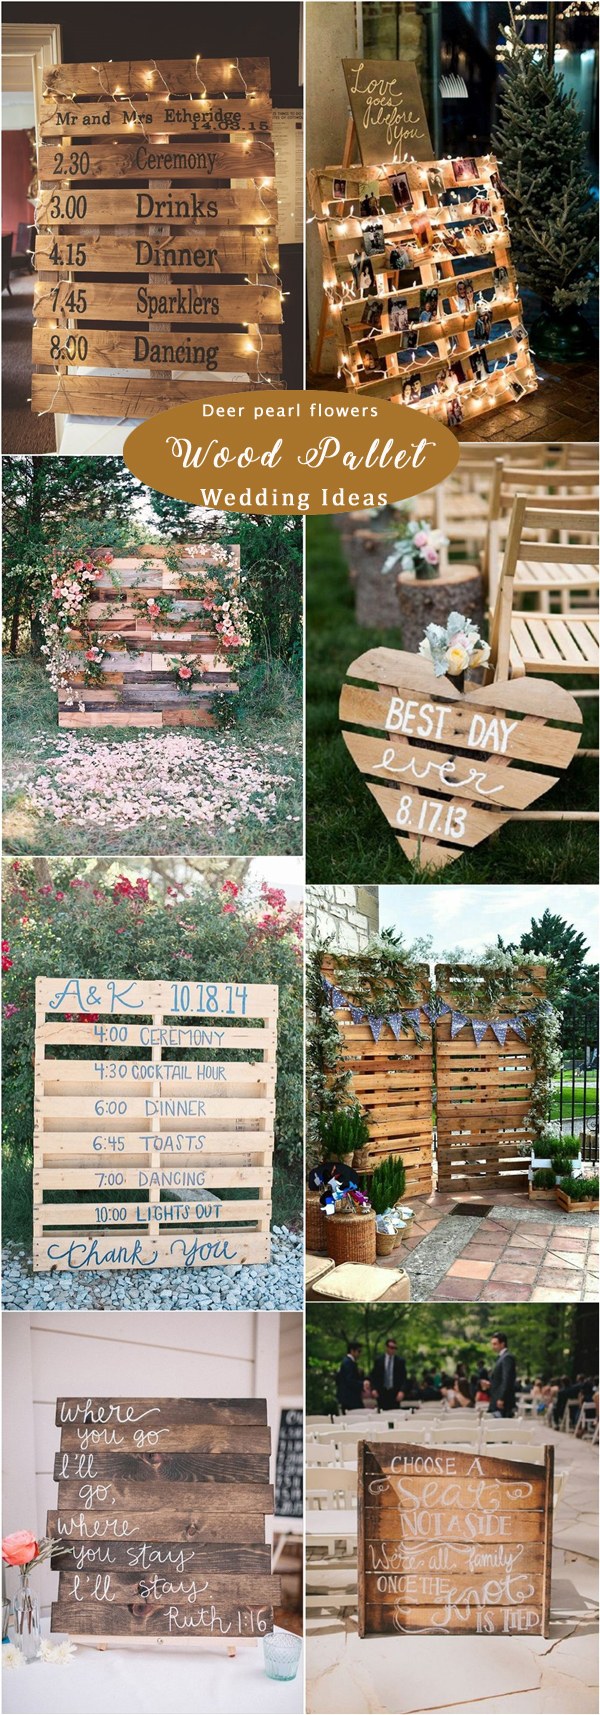 Rustic wood pallet wedding ideas